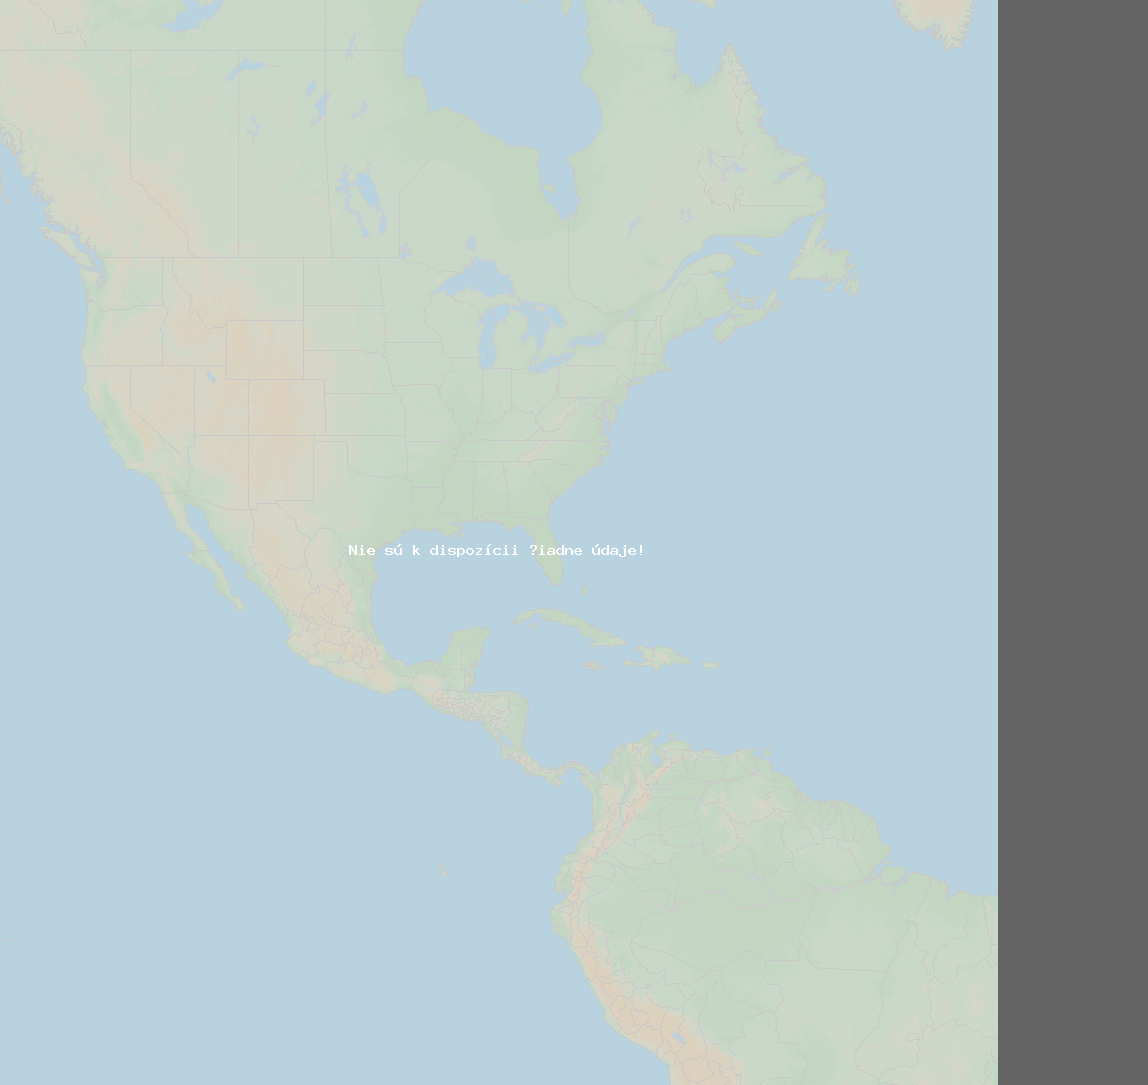 Pomer bleskov (Stanica Seattle) North America 2021 